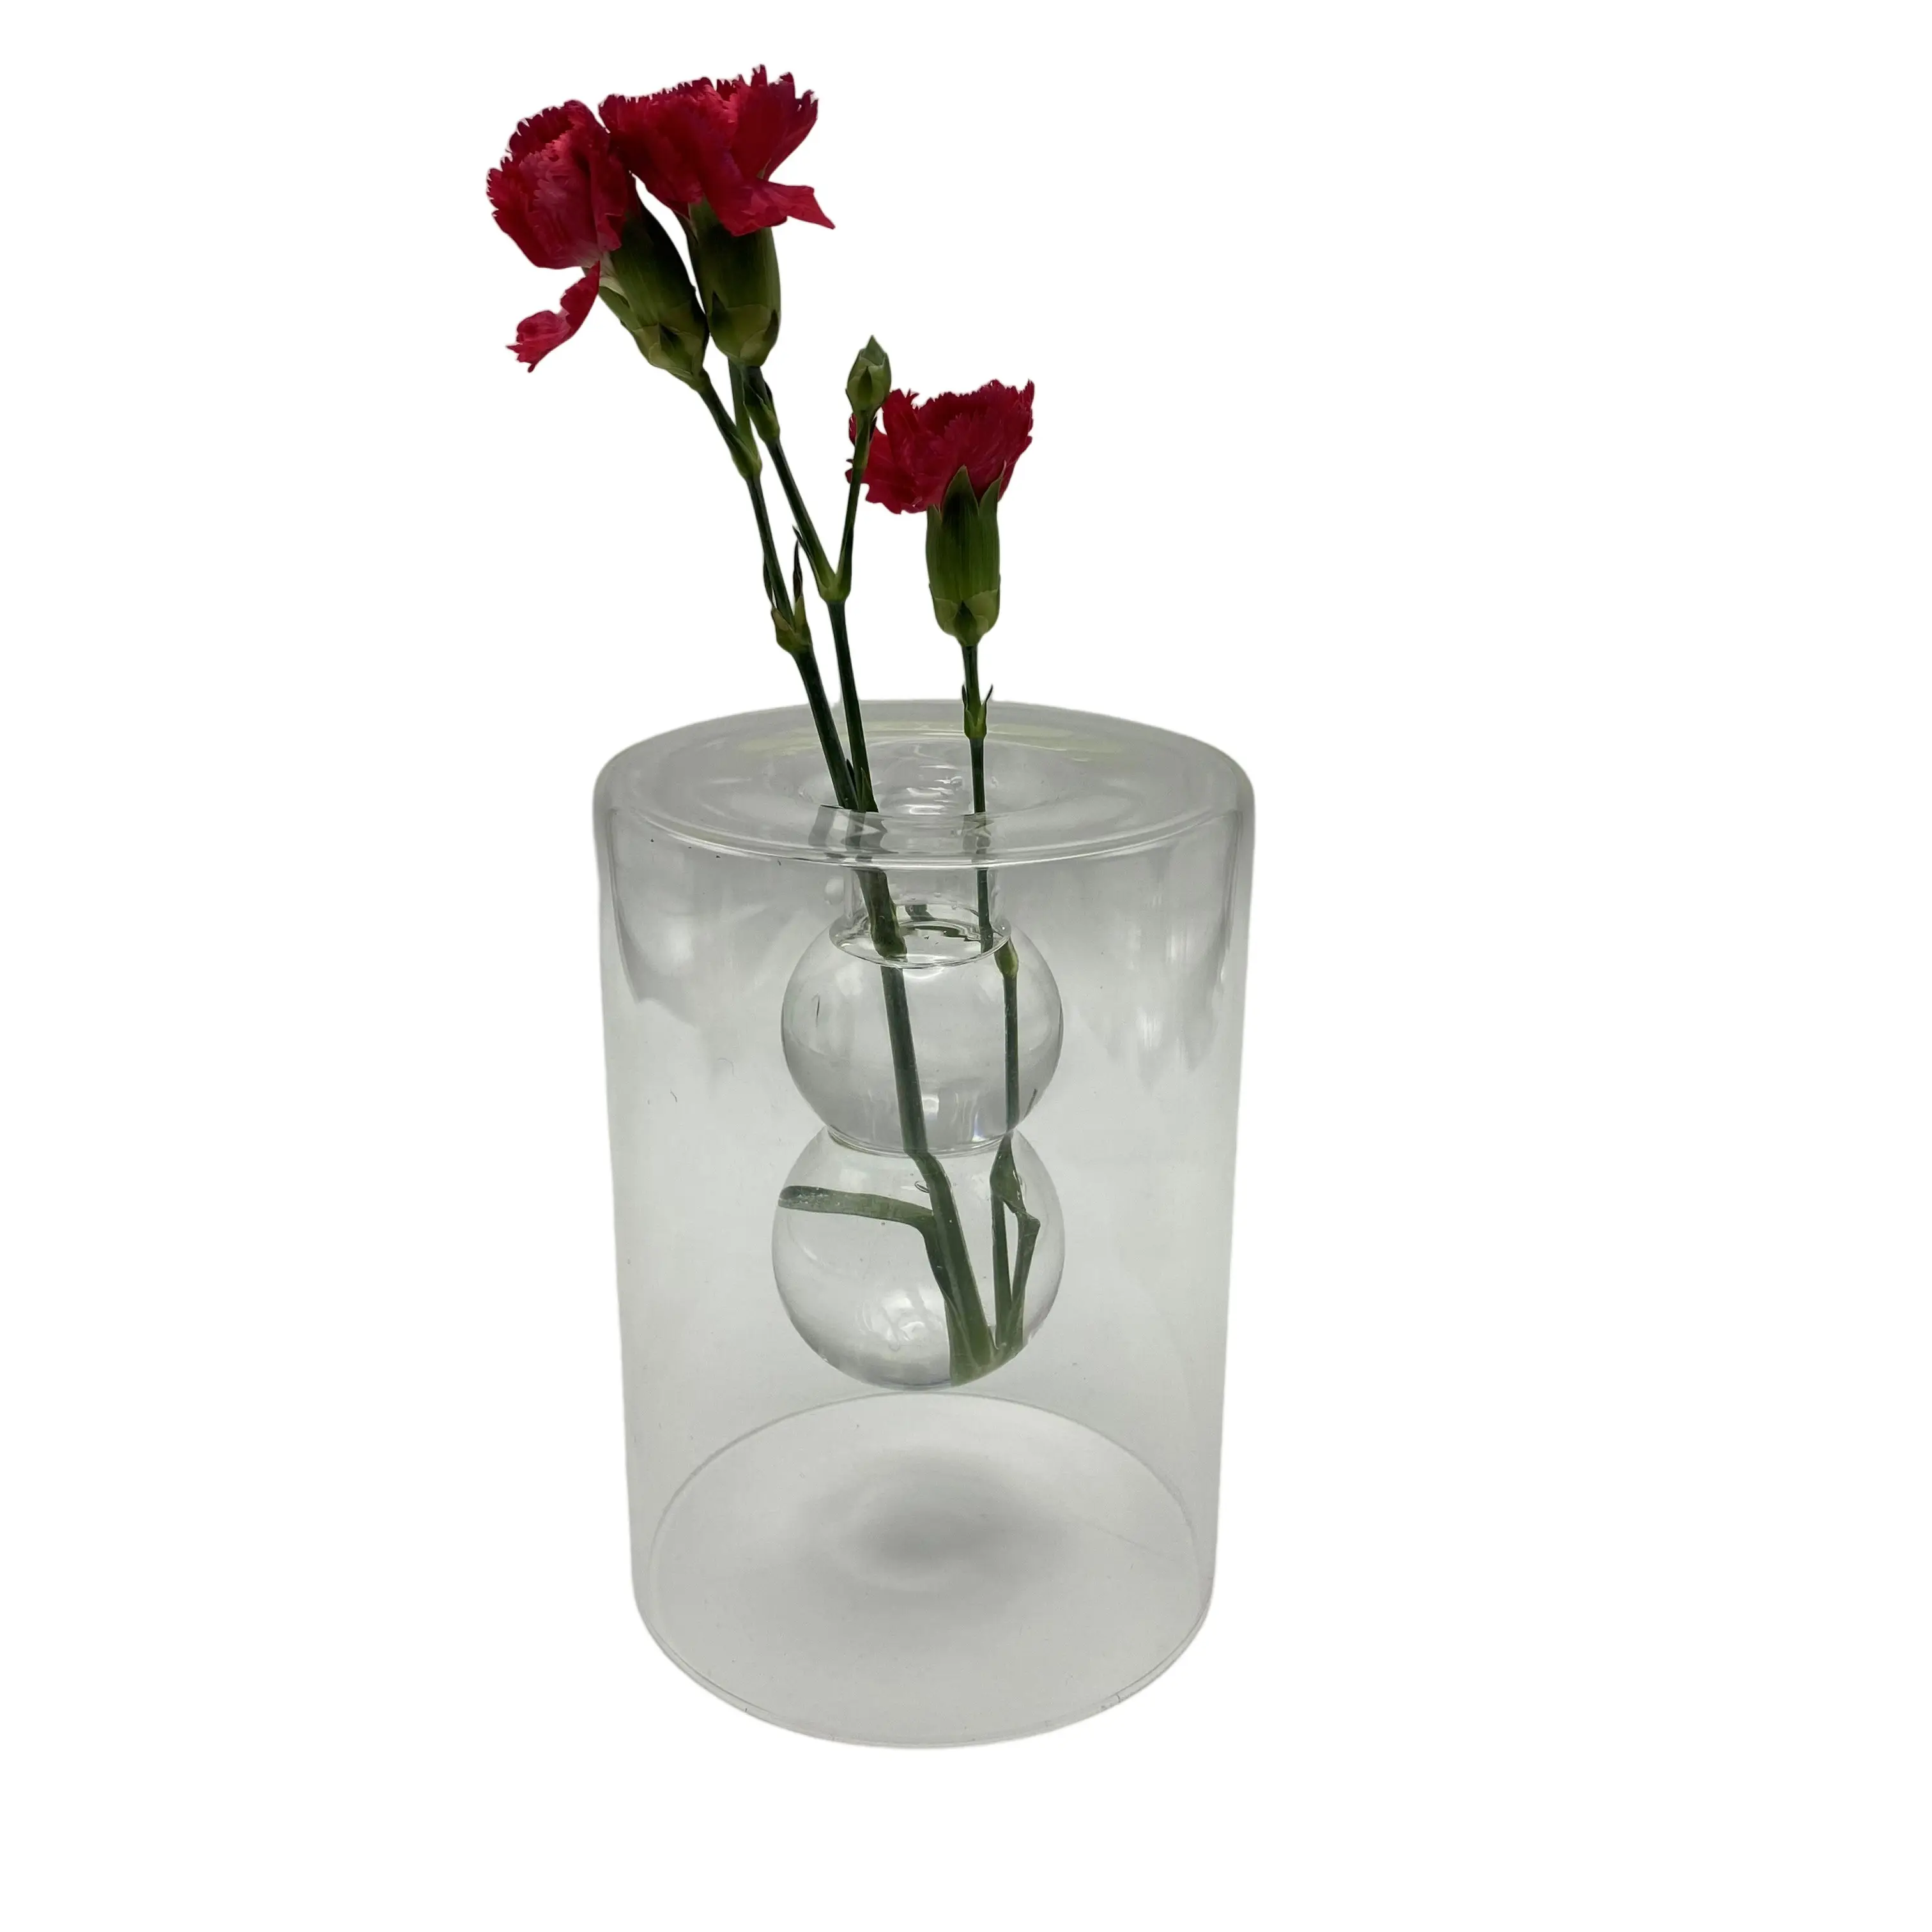 Professional High Quality Crystal Vase Decoration Flower Glass Vase